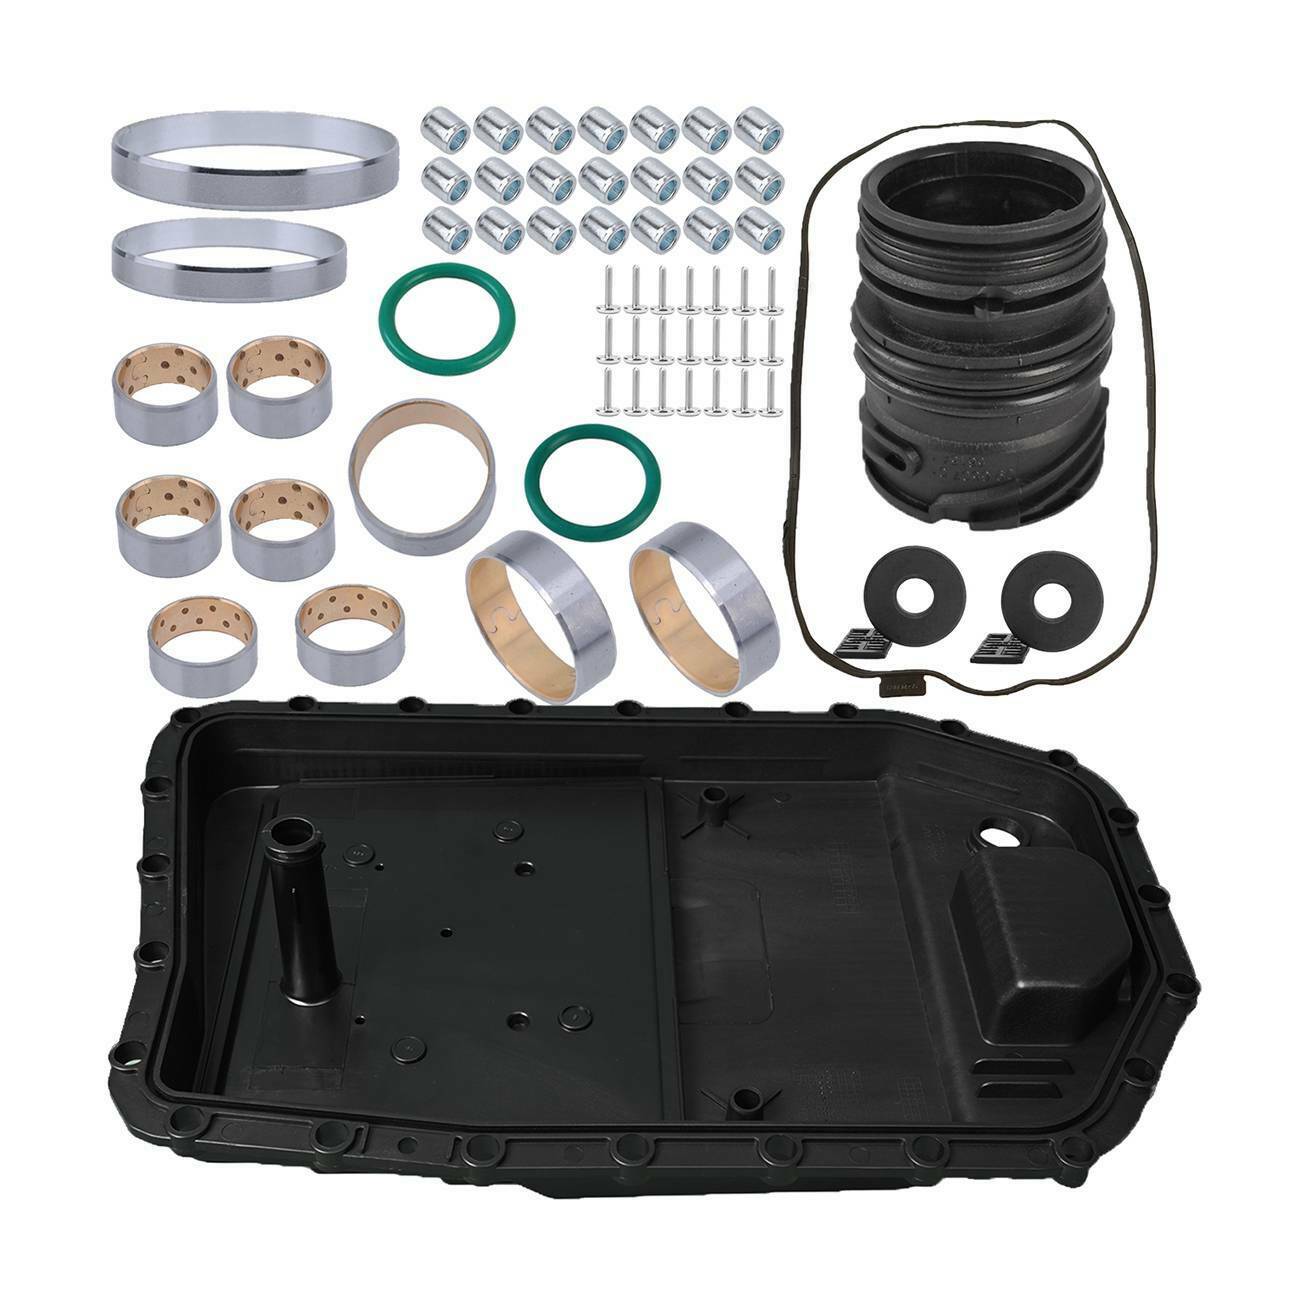 Auto Trans Oil Pan Filter + Repair Kit + Sleeve for BMW E60 E83 E89 E90 German Made